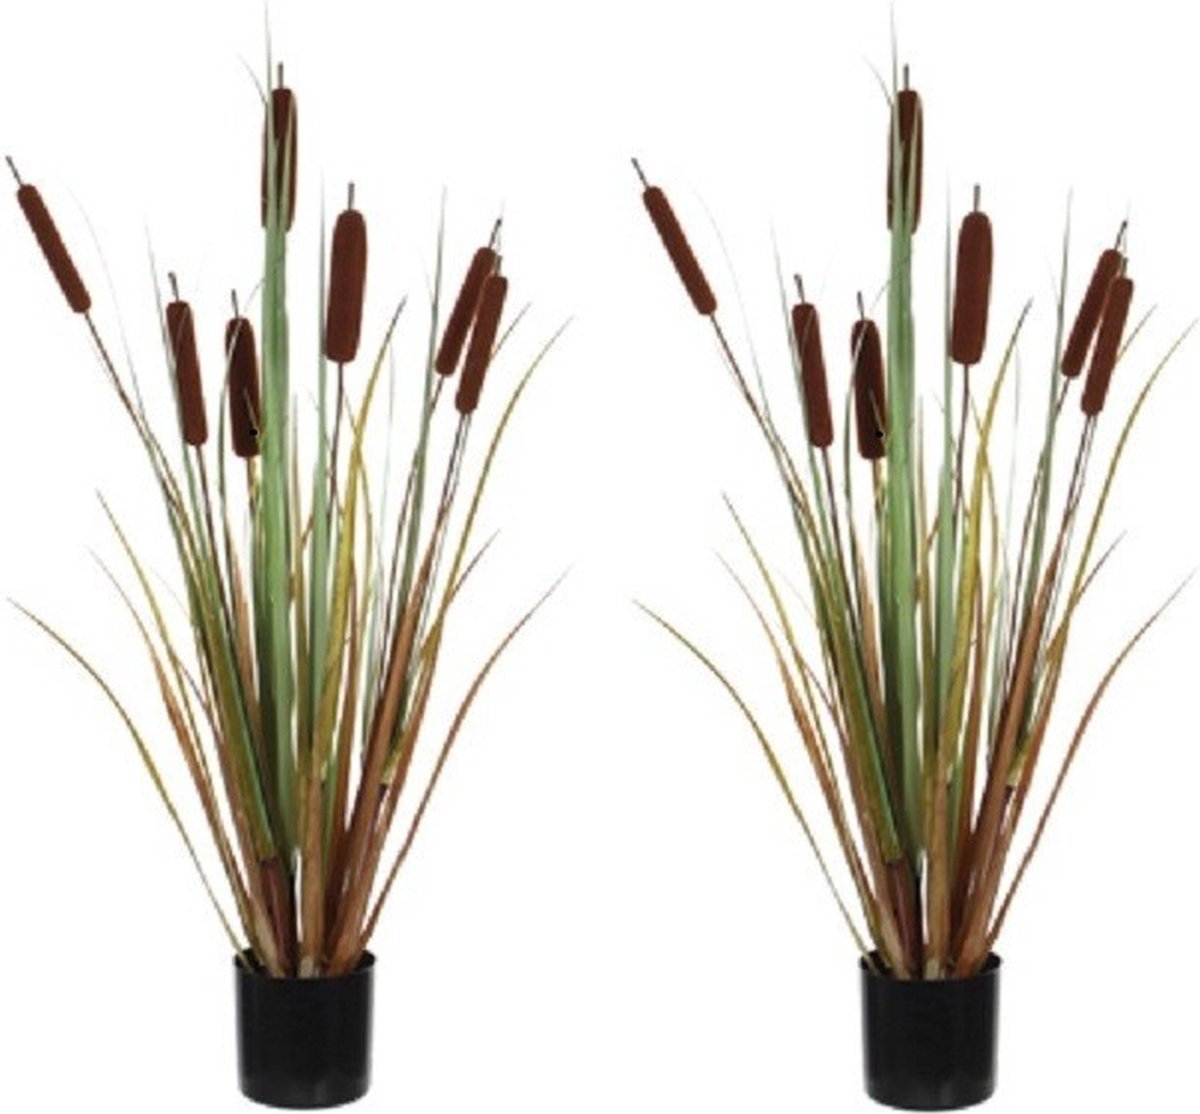 2x Groene Lisdodde/grasplant kunstplanten met sigaren 90 cm in bruine pot - Kunstplanten/nepplanten - Grasplanten - Shoppartners